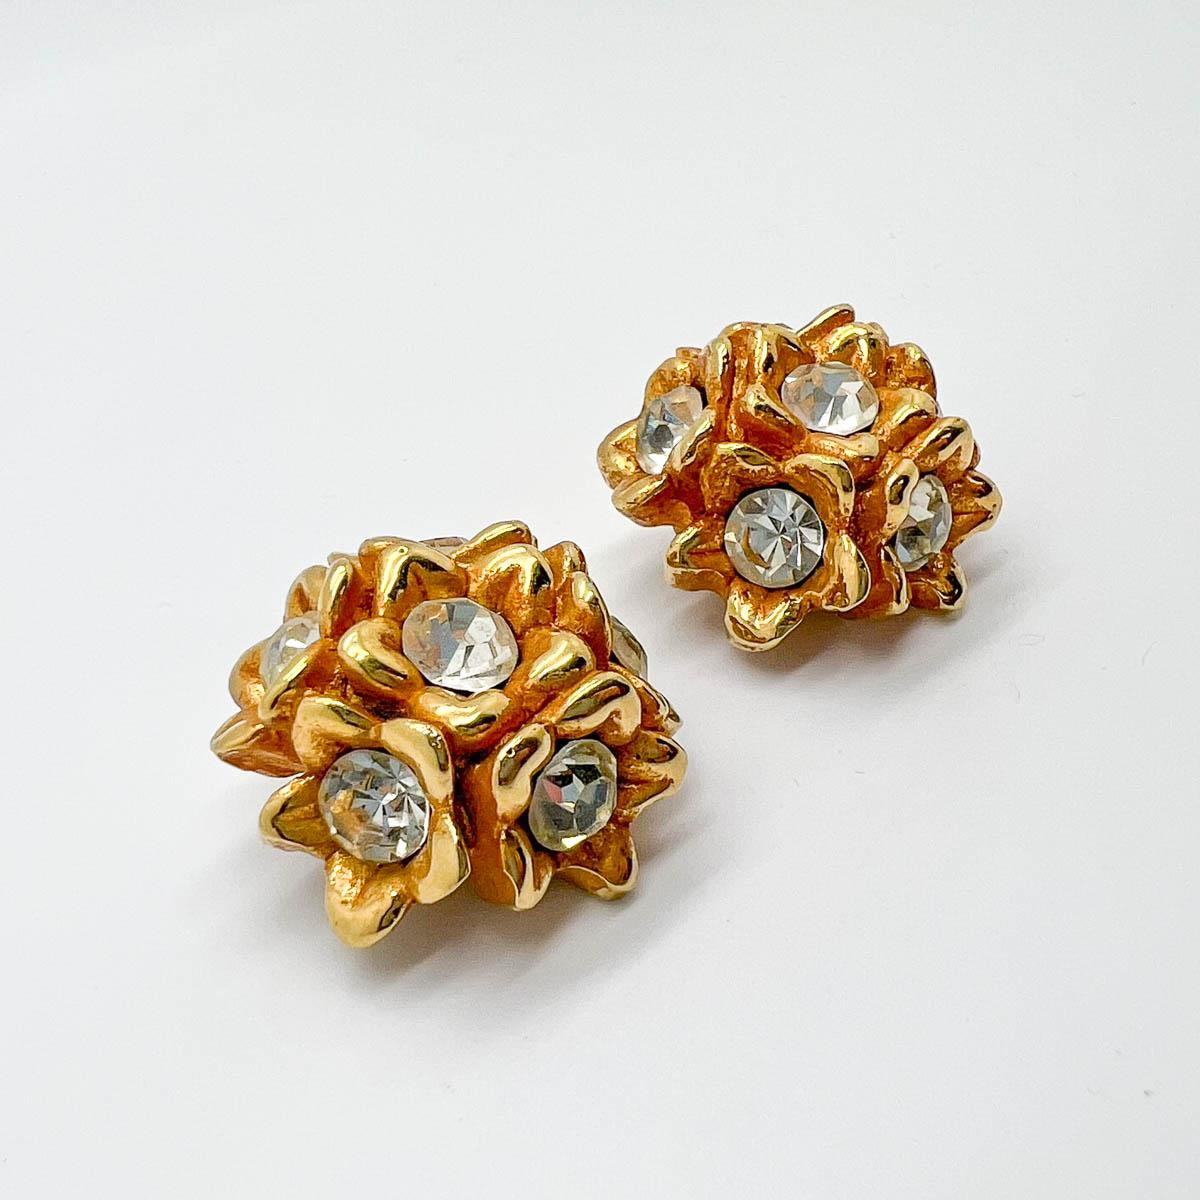 Vintage Alexis Lahellec Paris Floral Crystal Earrings 1980s In Good Condition For Sale In Wilmslow, GB